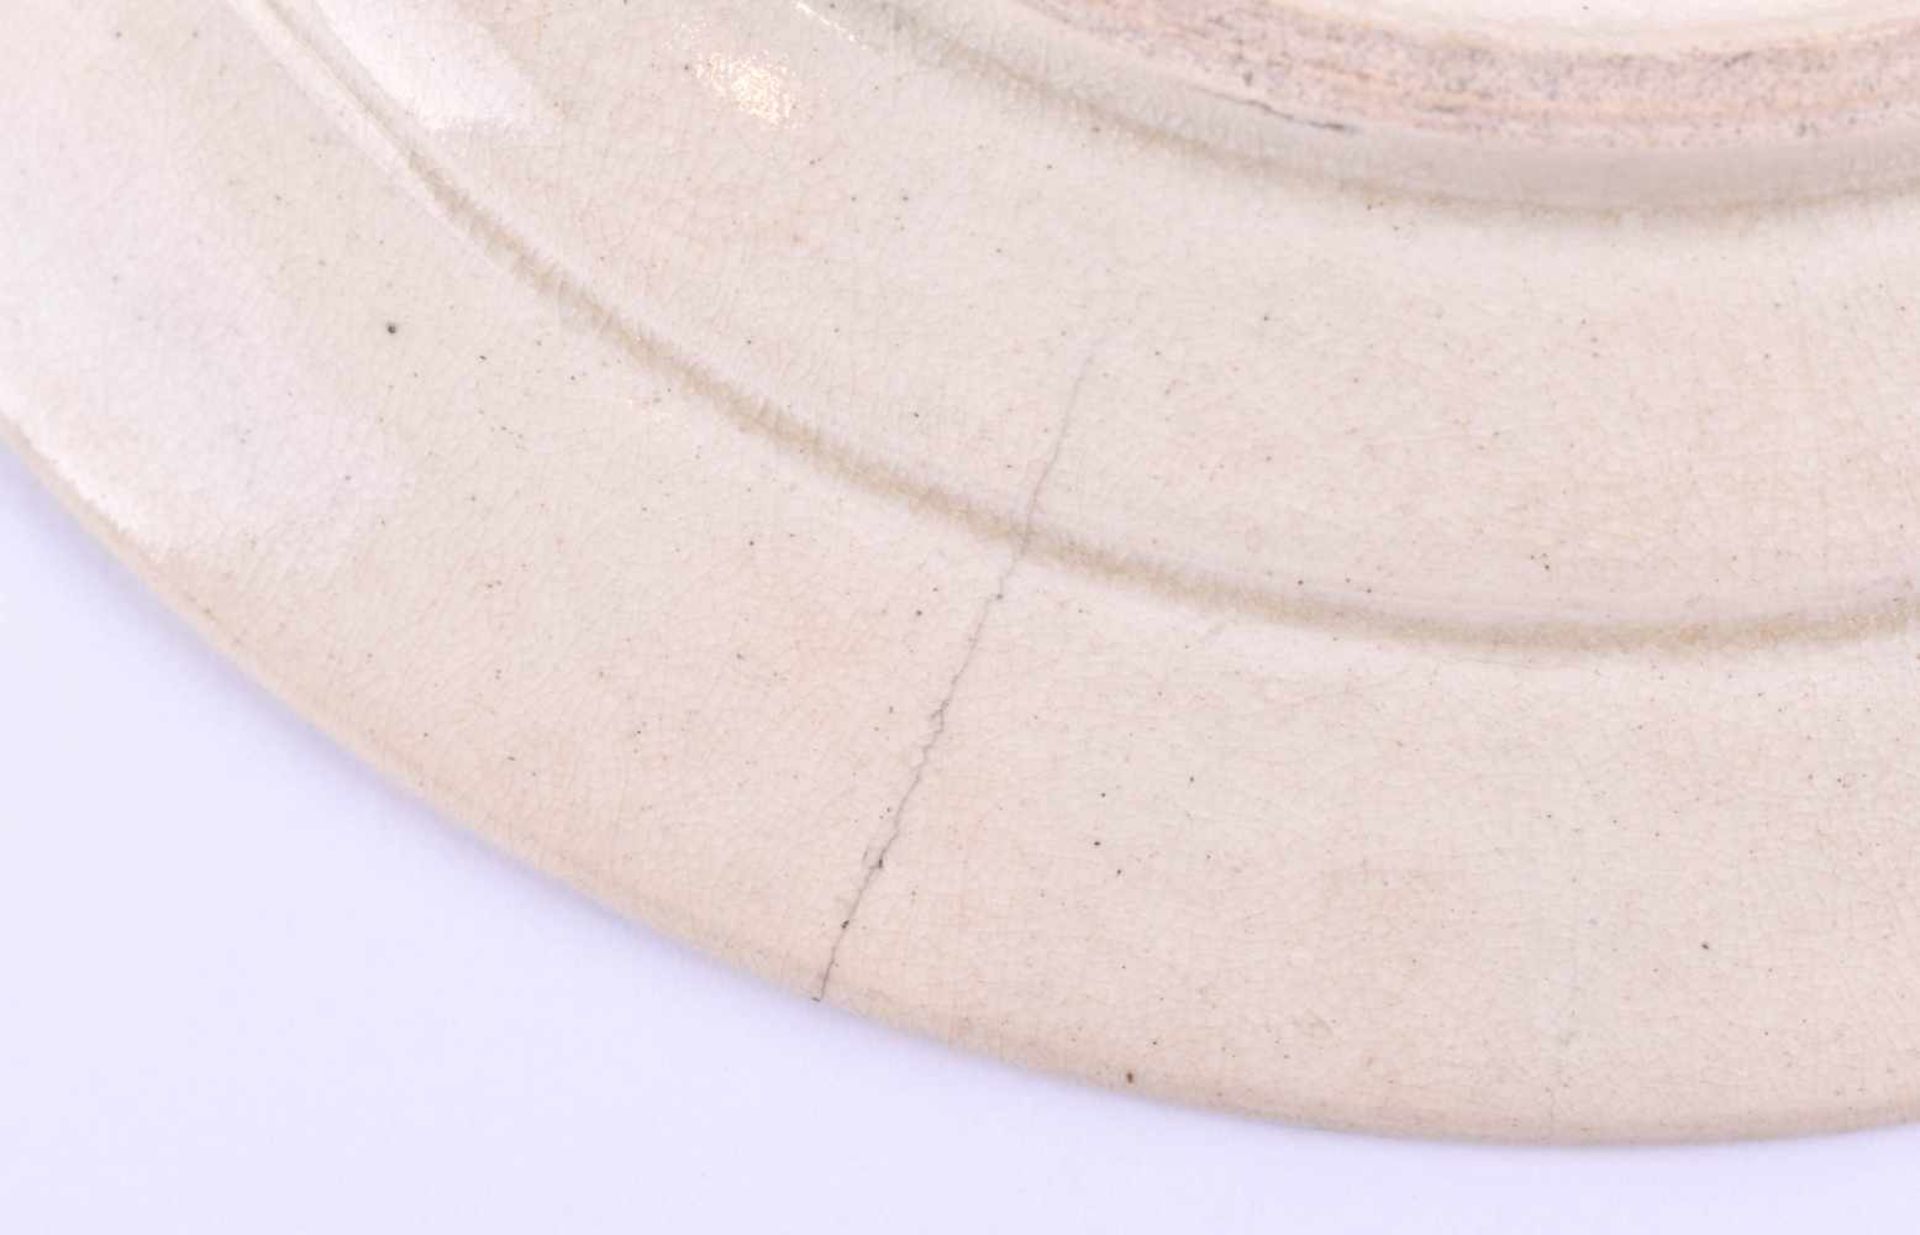 Keramik-Cloisonneteller Japan Meiji Periodeim Spiegel min. Chip, am Rand kleiner Haarriß, - Bild 3 aus 4